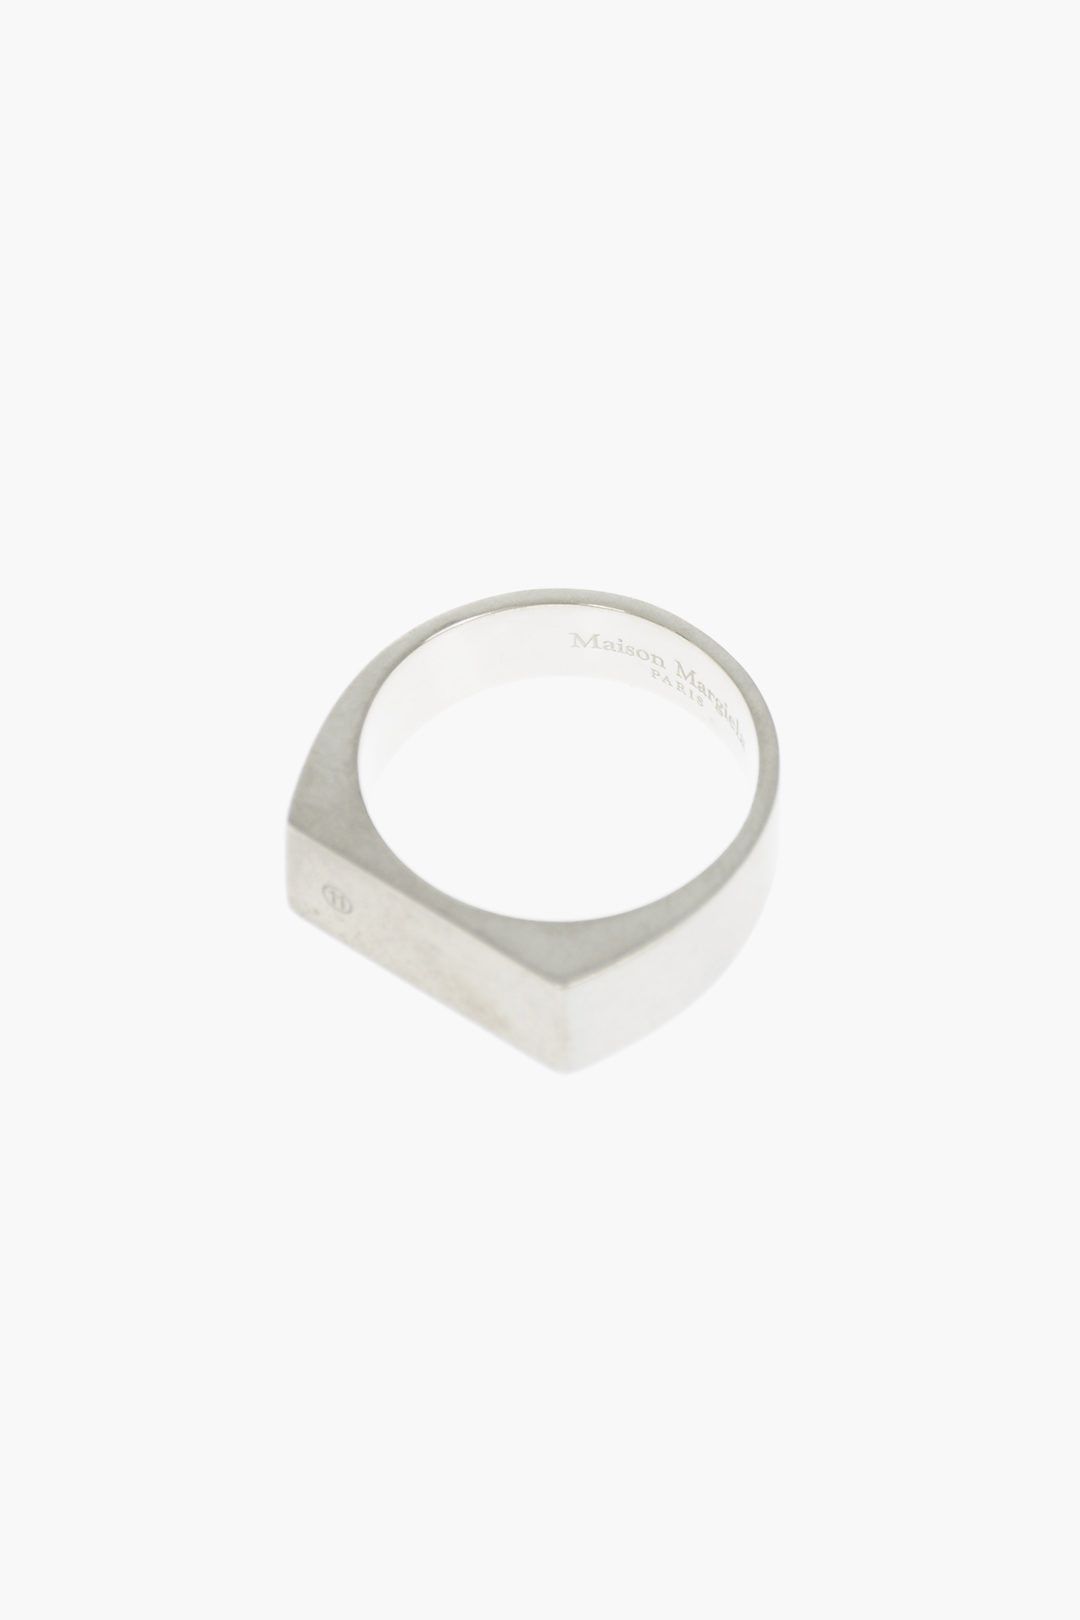 Maison Margiela Maison Margiela MM11 Solid Color Silver Ring | Grailed